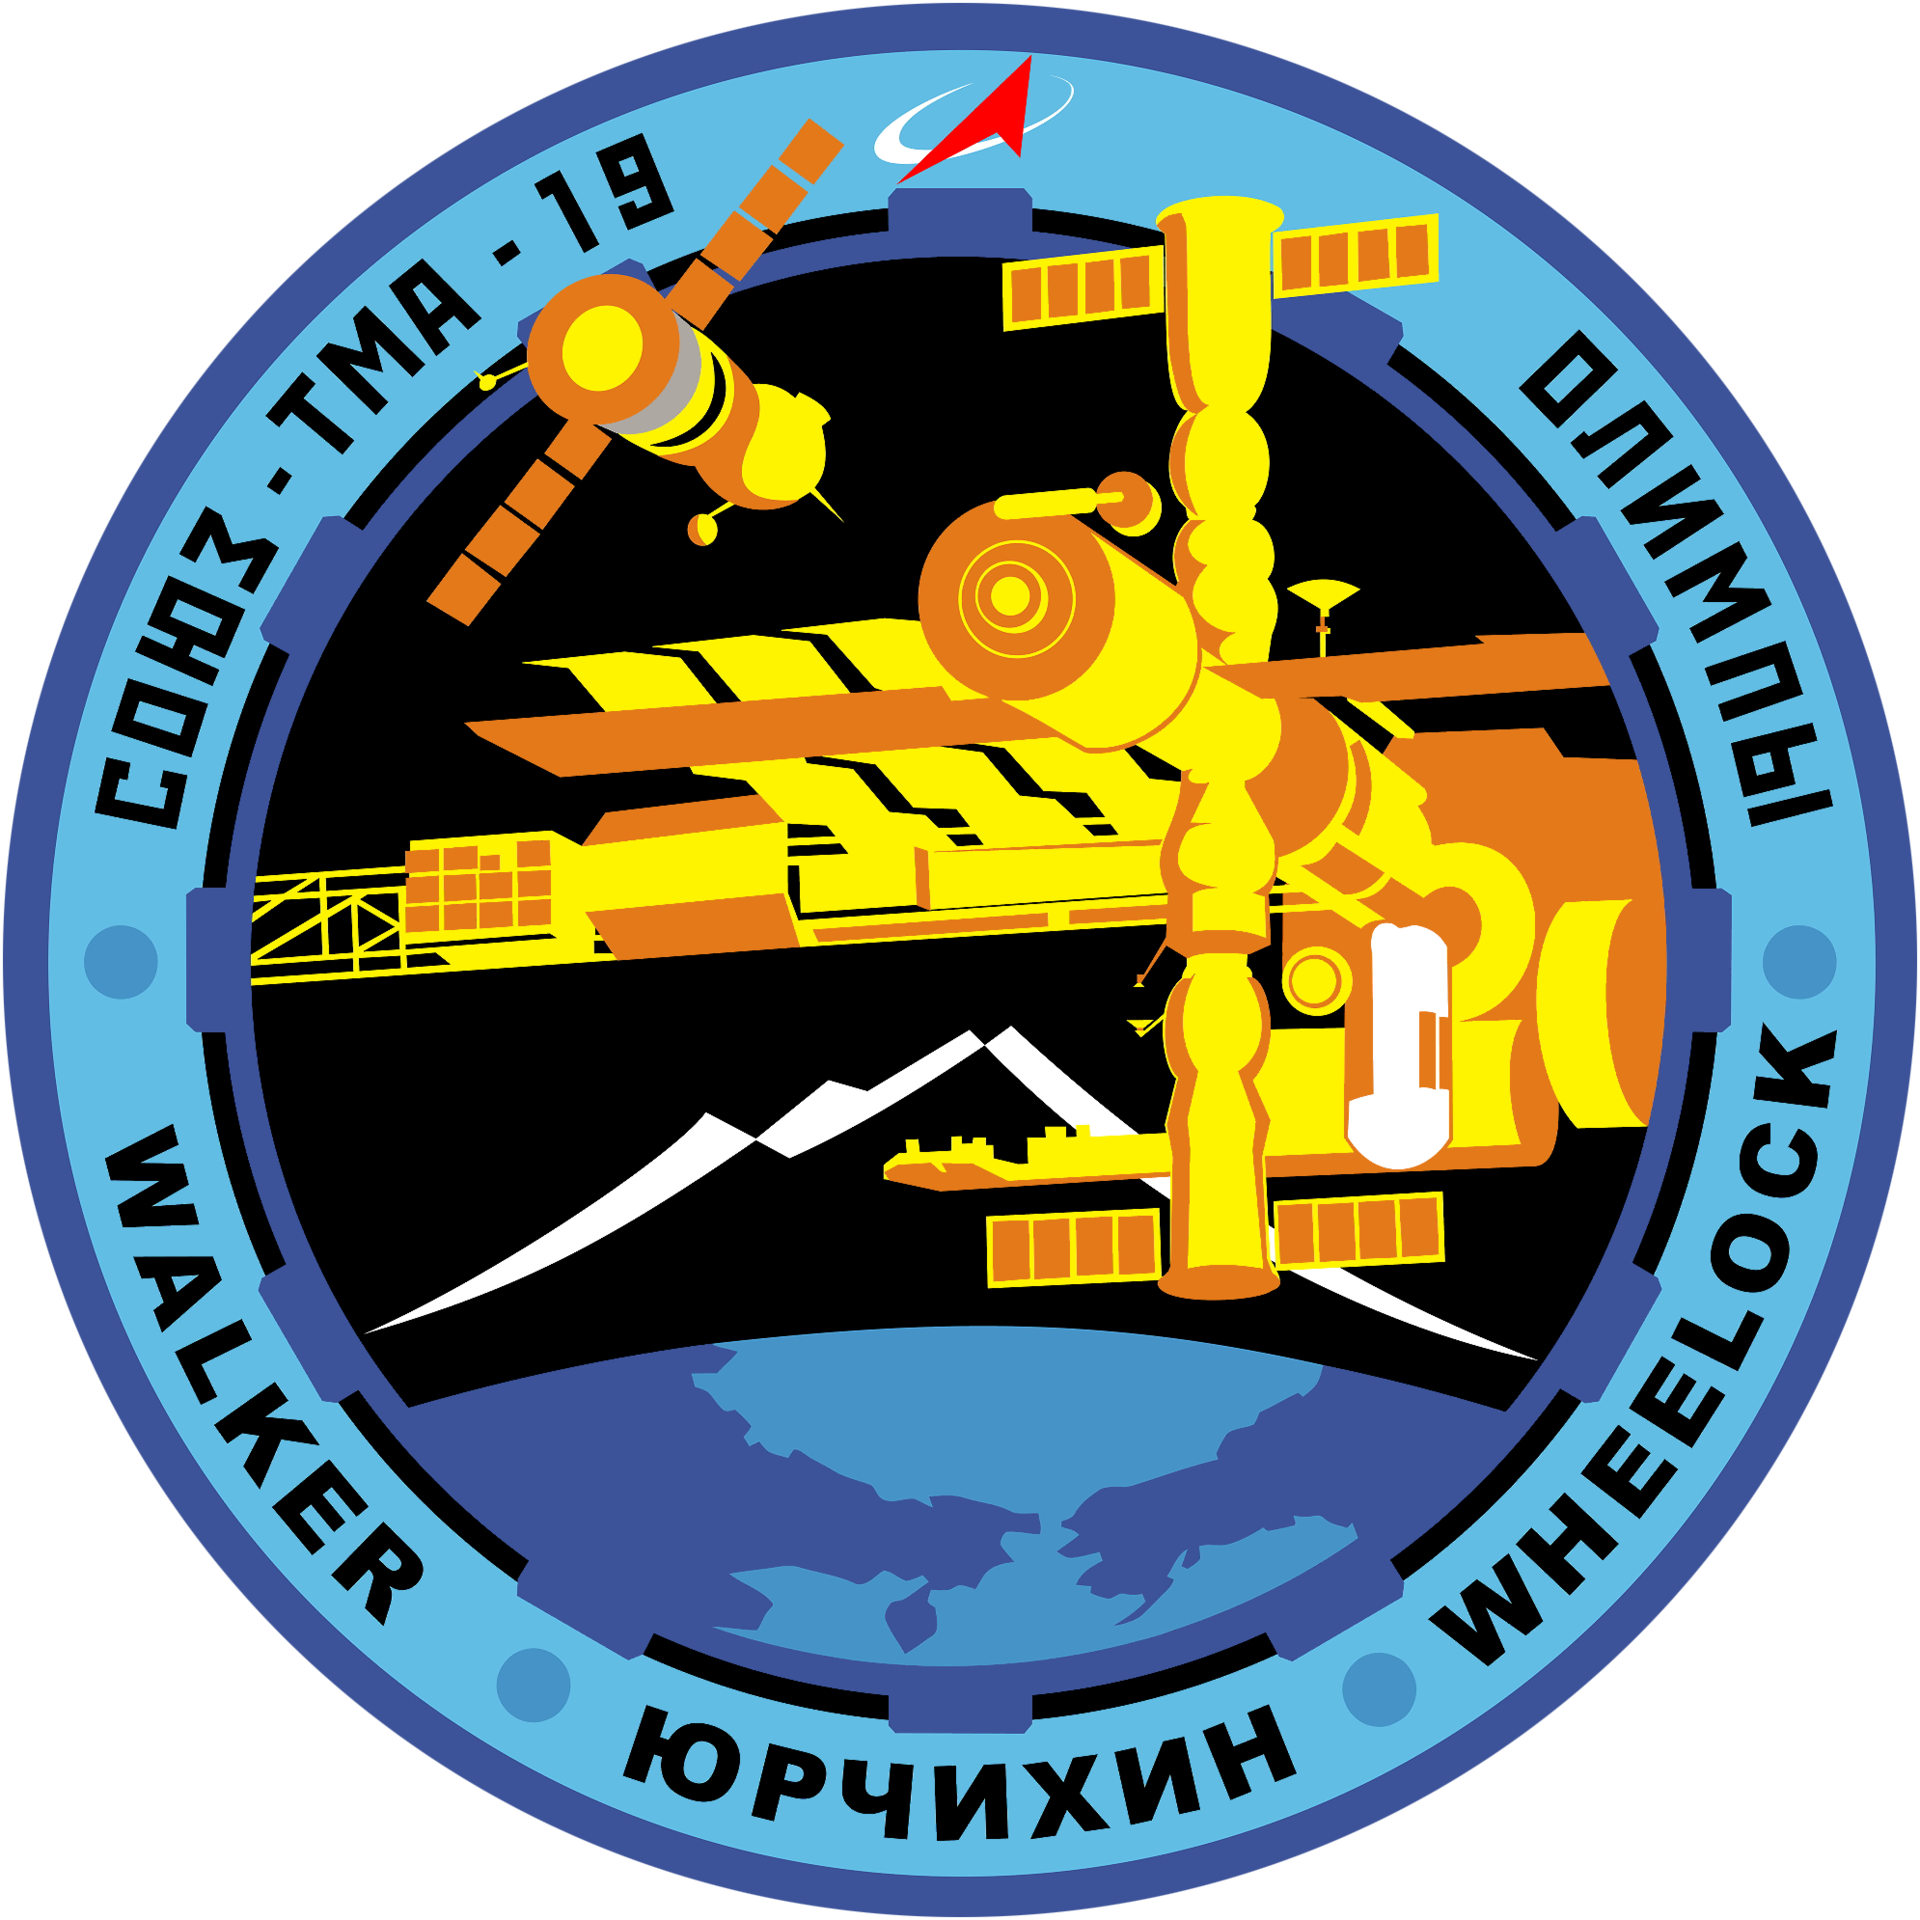 Mission patch for Soyuz TMA-18M